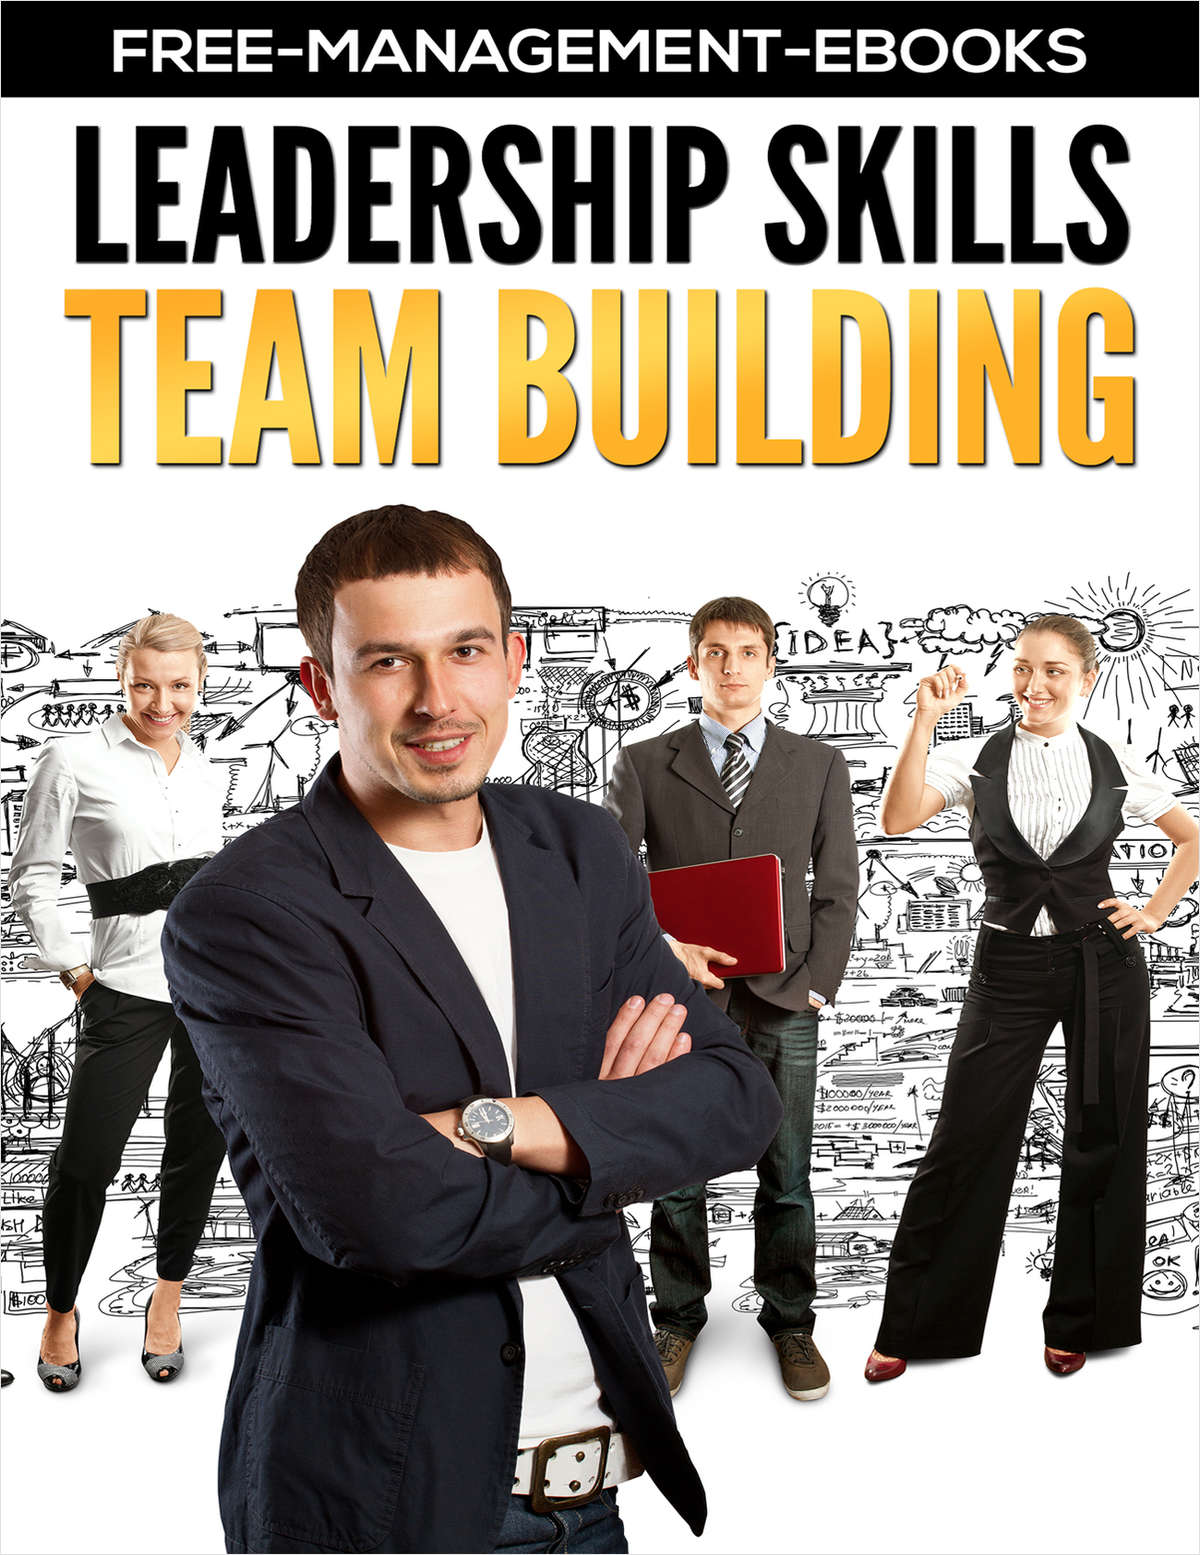 Team Building - Developing Your Leadership Skills